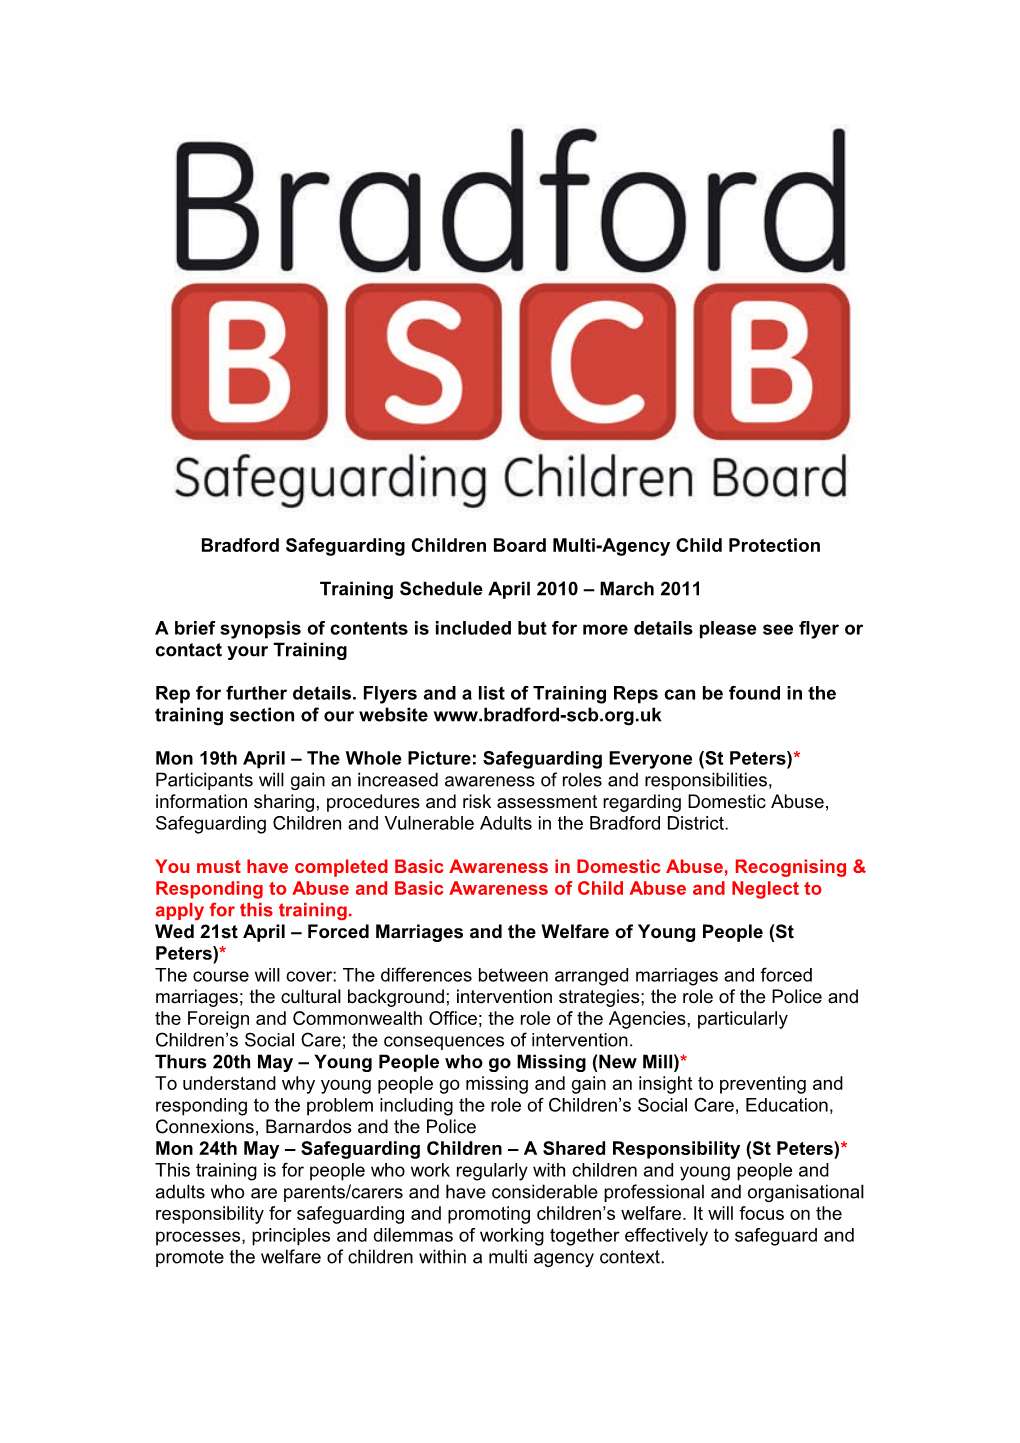 Bradford Safeguarding Childrenboardmulti-Agency Child Protection